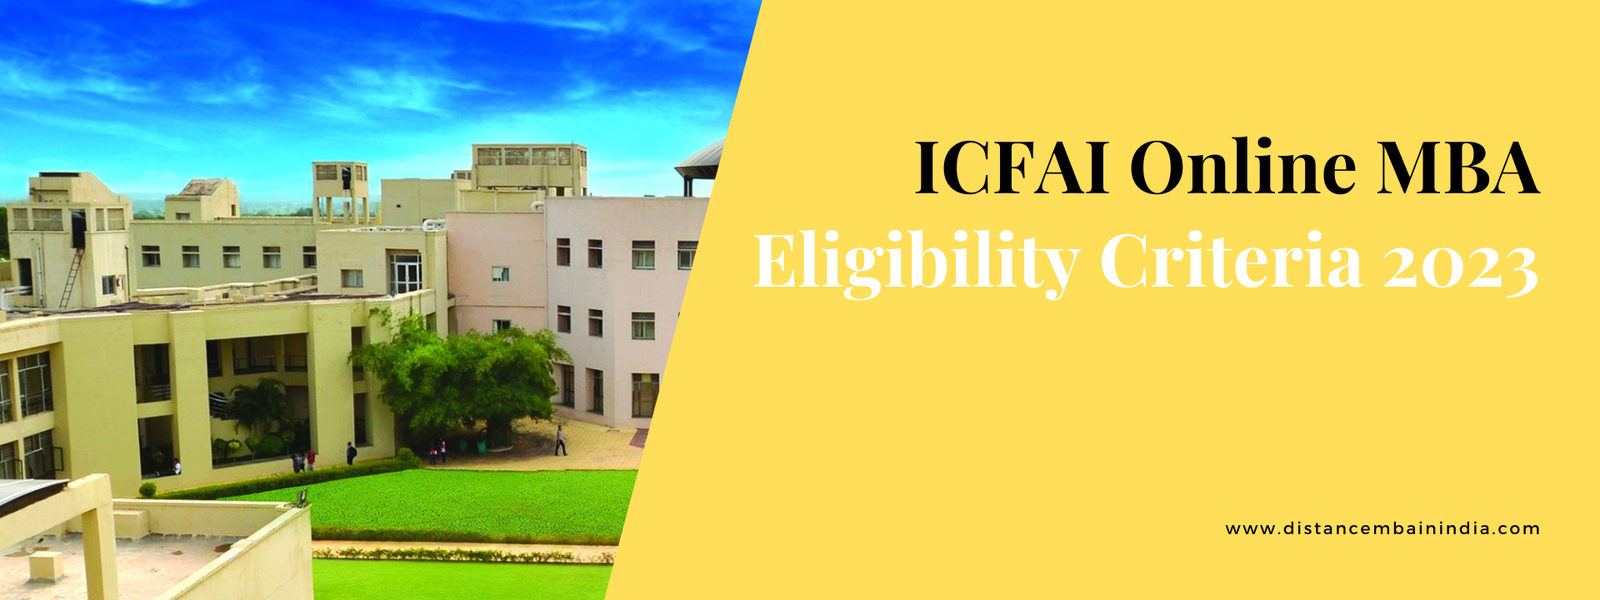 ICFAI Online MBA Eligibility Criteria